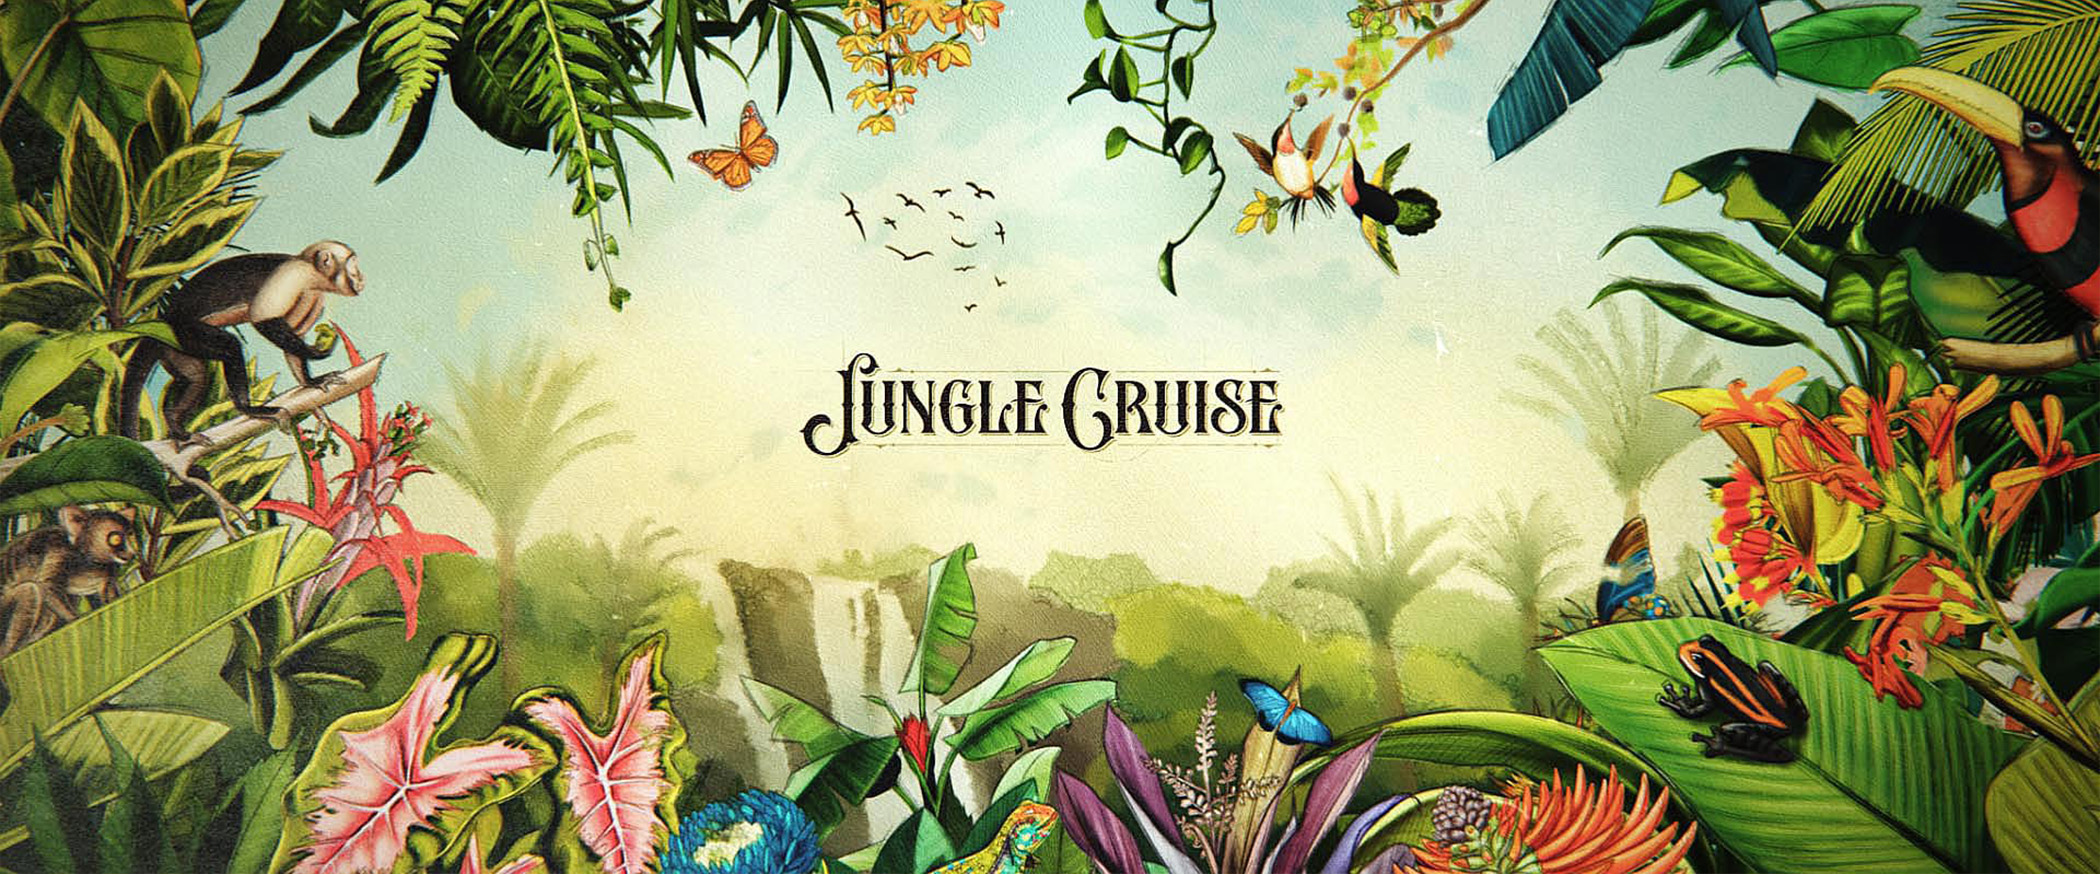 Jungle Cruise Artist Kyle Lambert